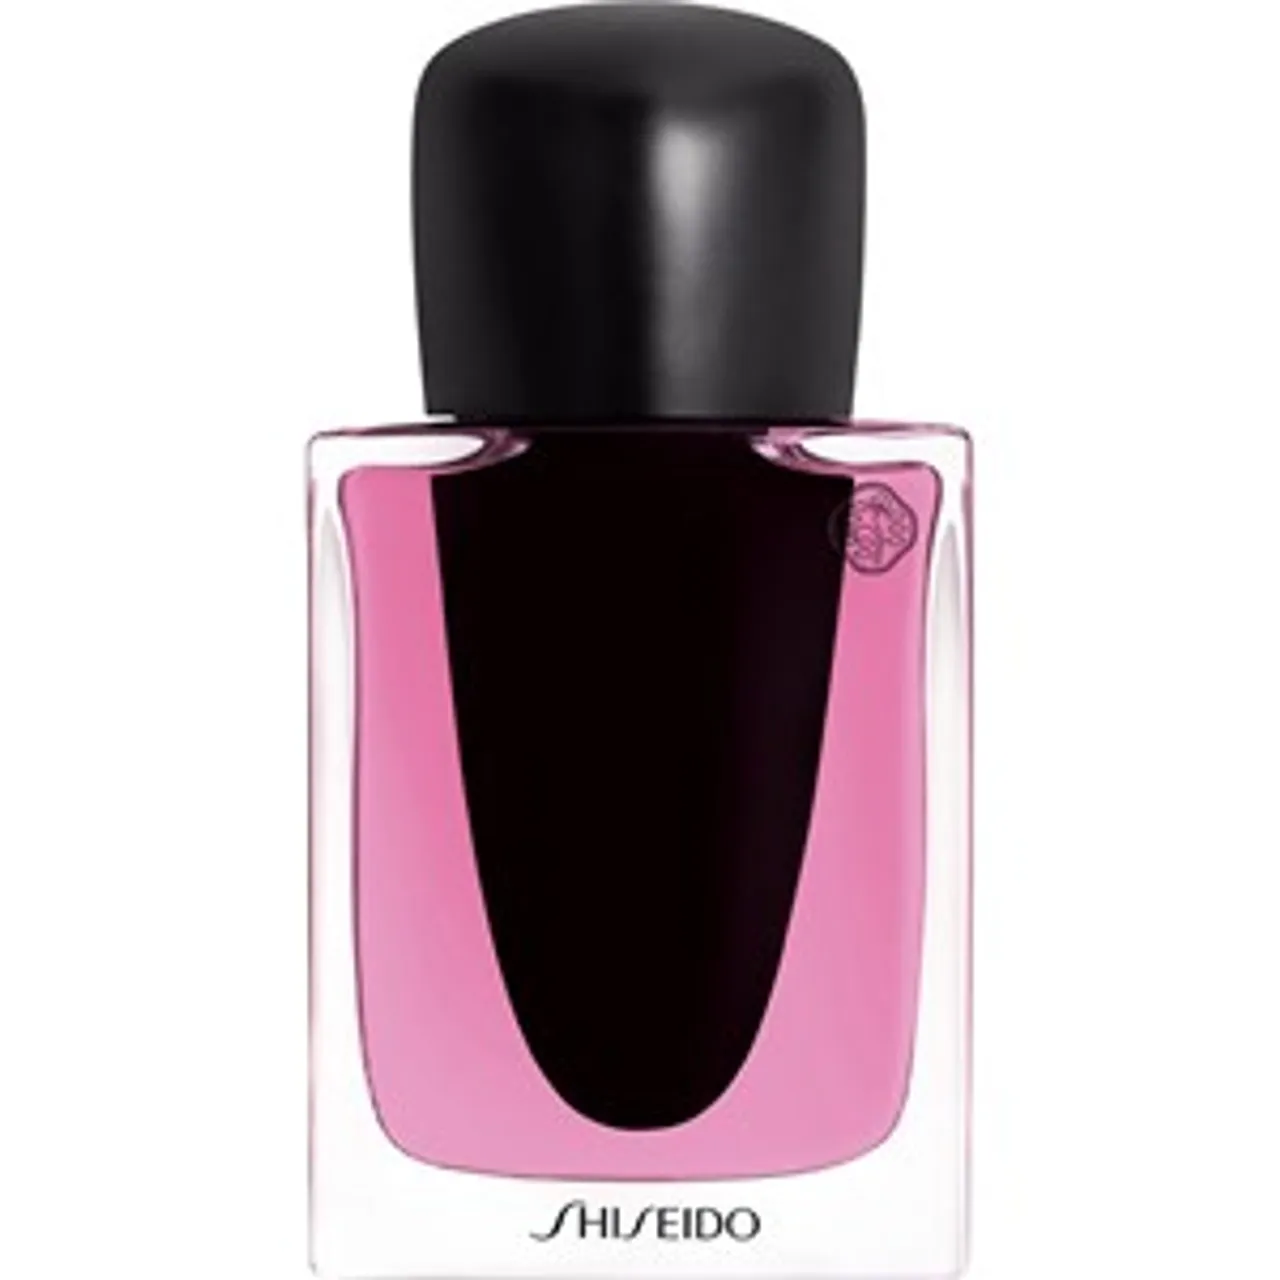 Shiseido Eau de Parfum Spray Female 30 ml